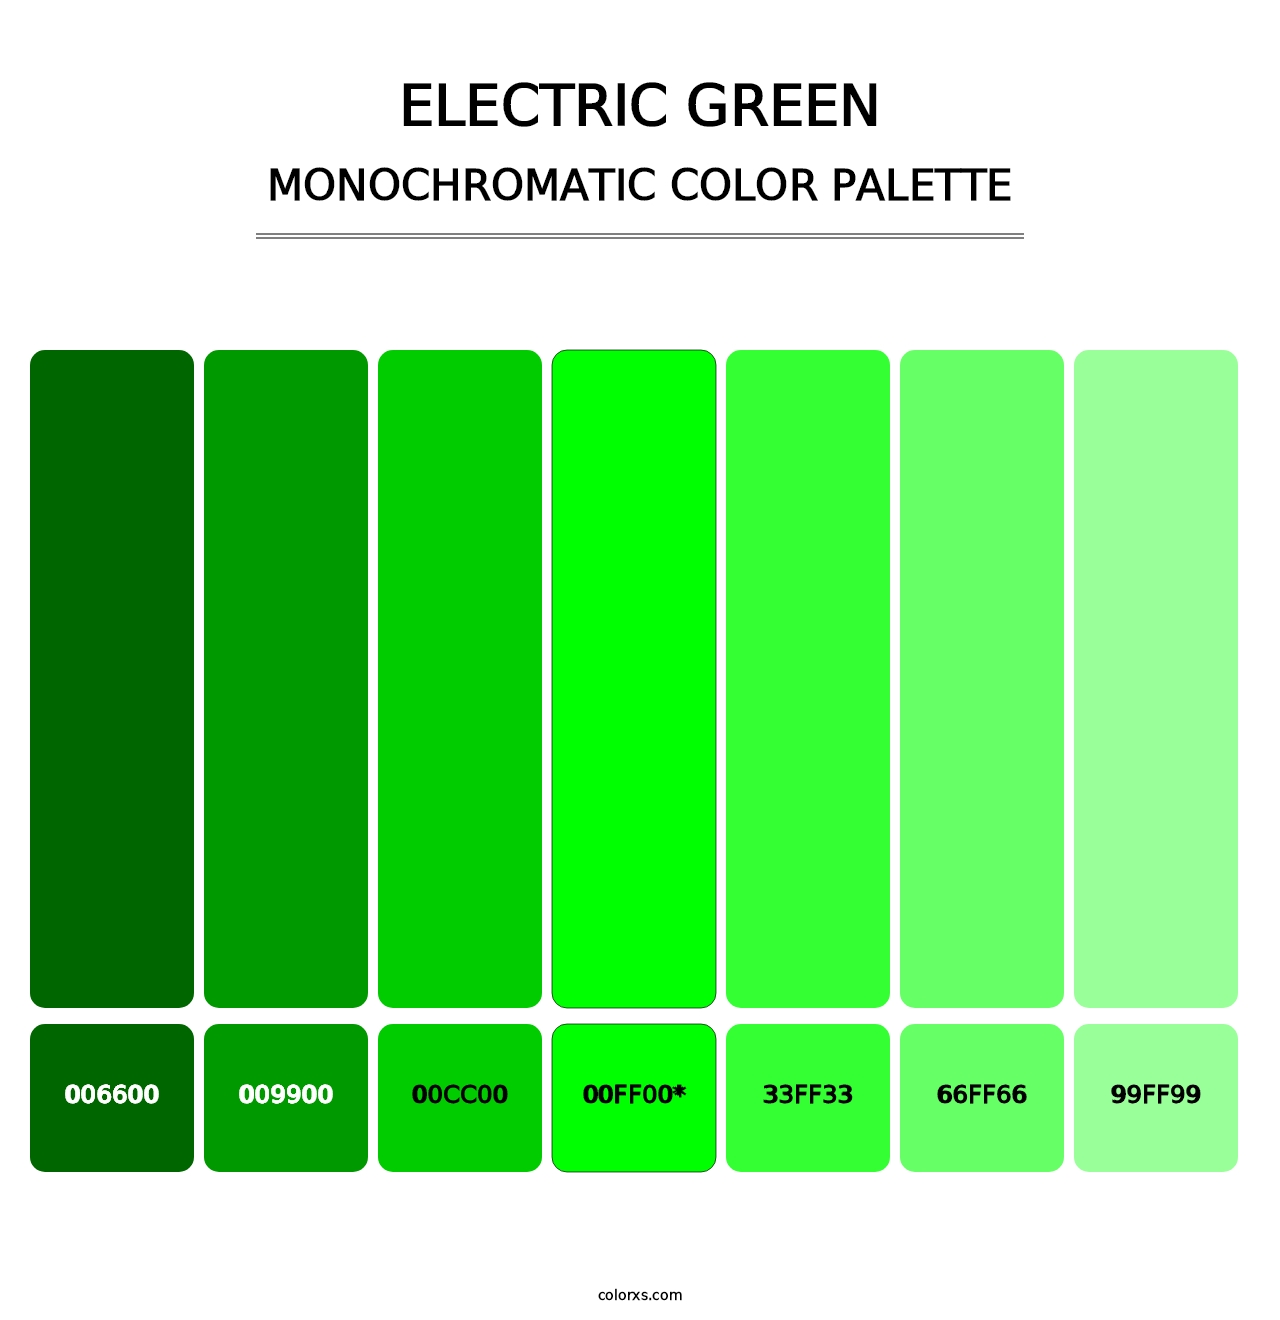 Electric Green - Monochromatic Color Palette